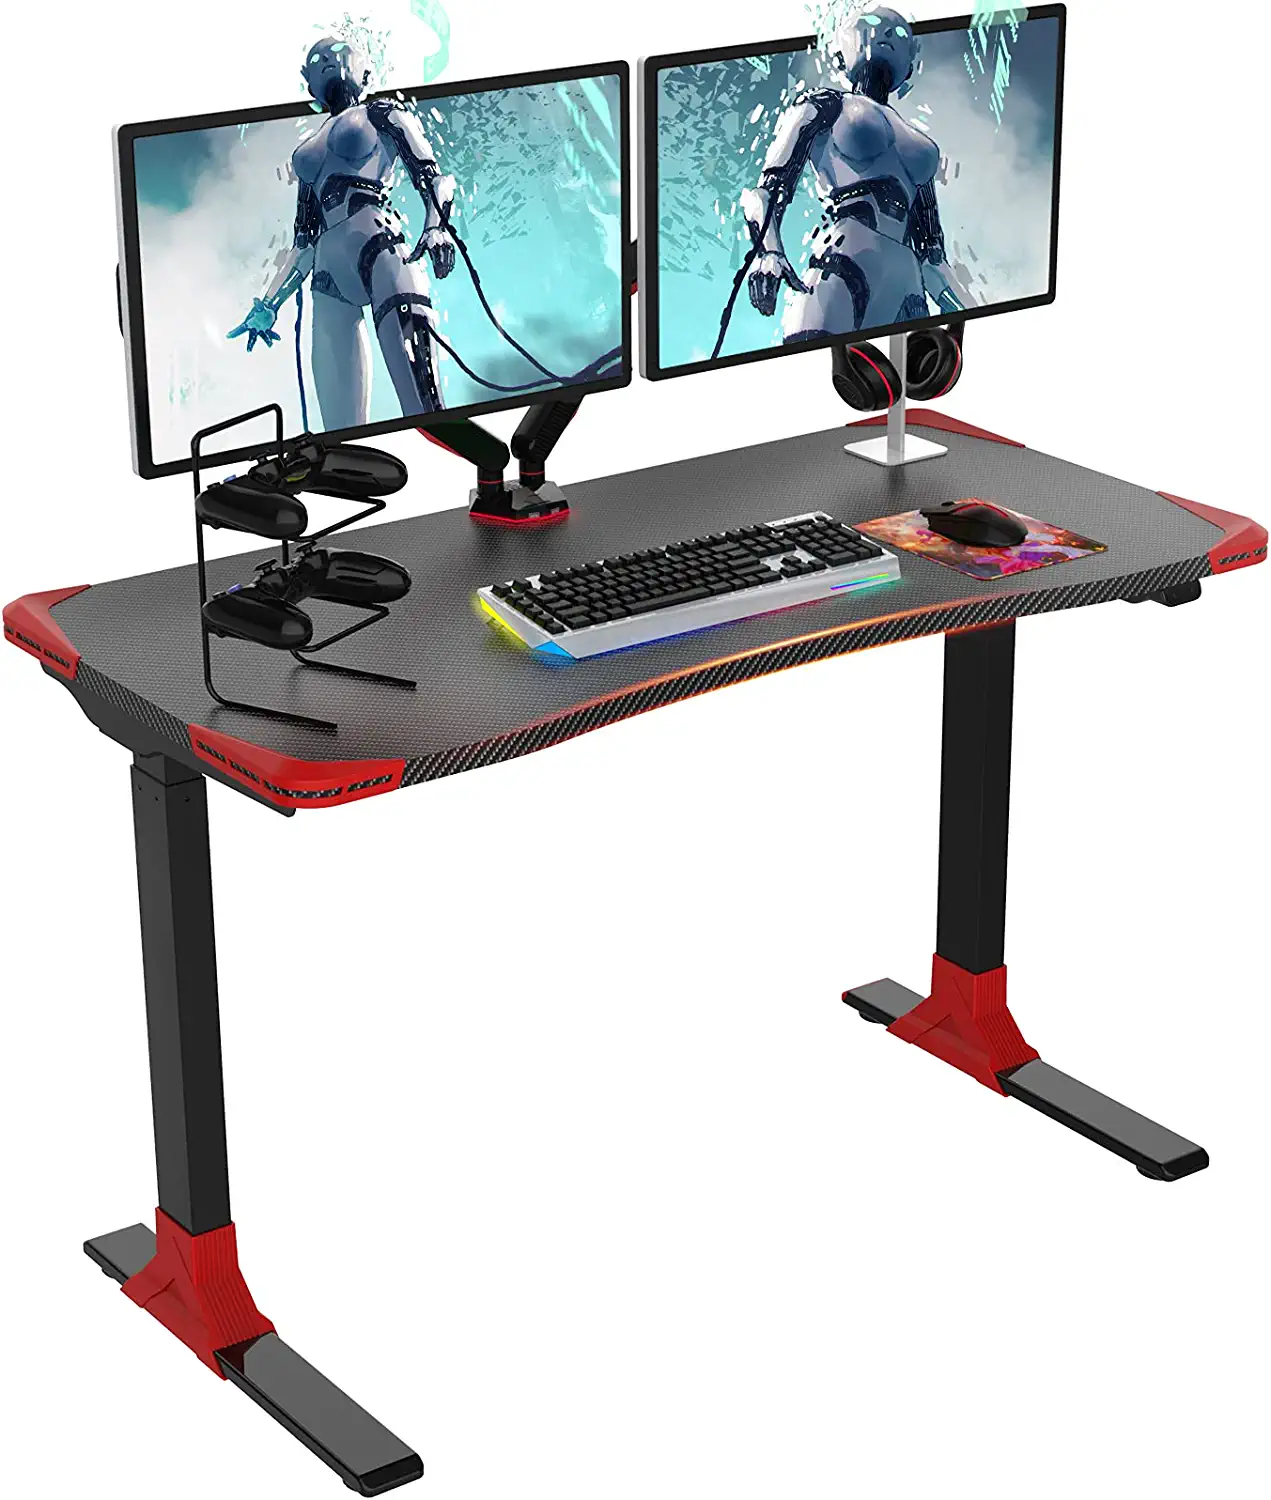 flexispot gaming desk electric standing desk adjustable gaming computer desk gaming table 48